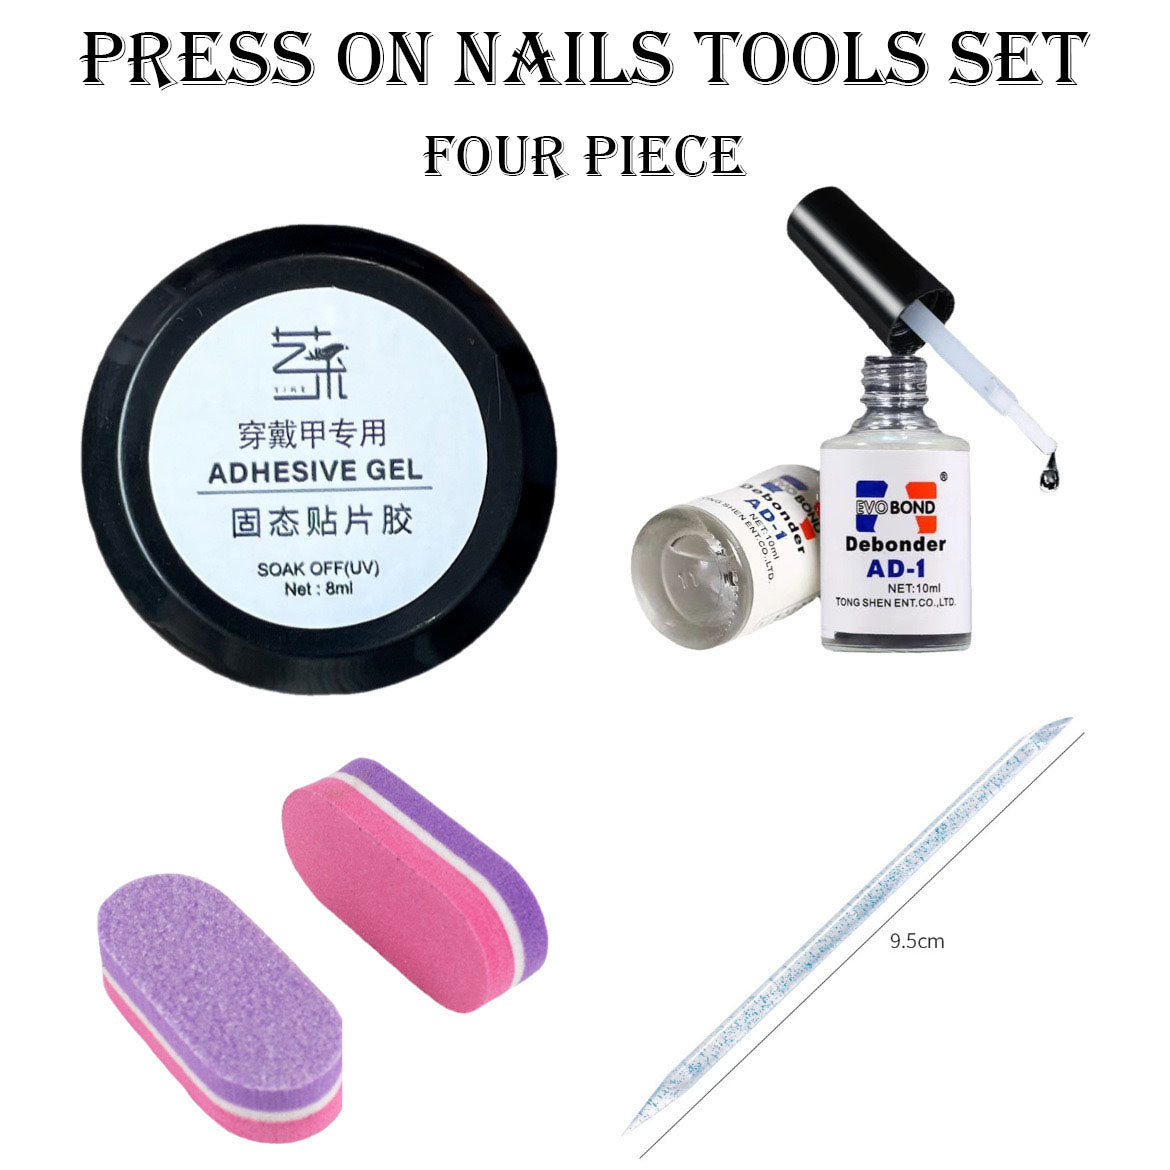 Press On Nails Tools